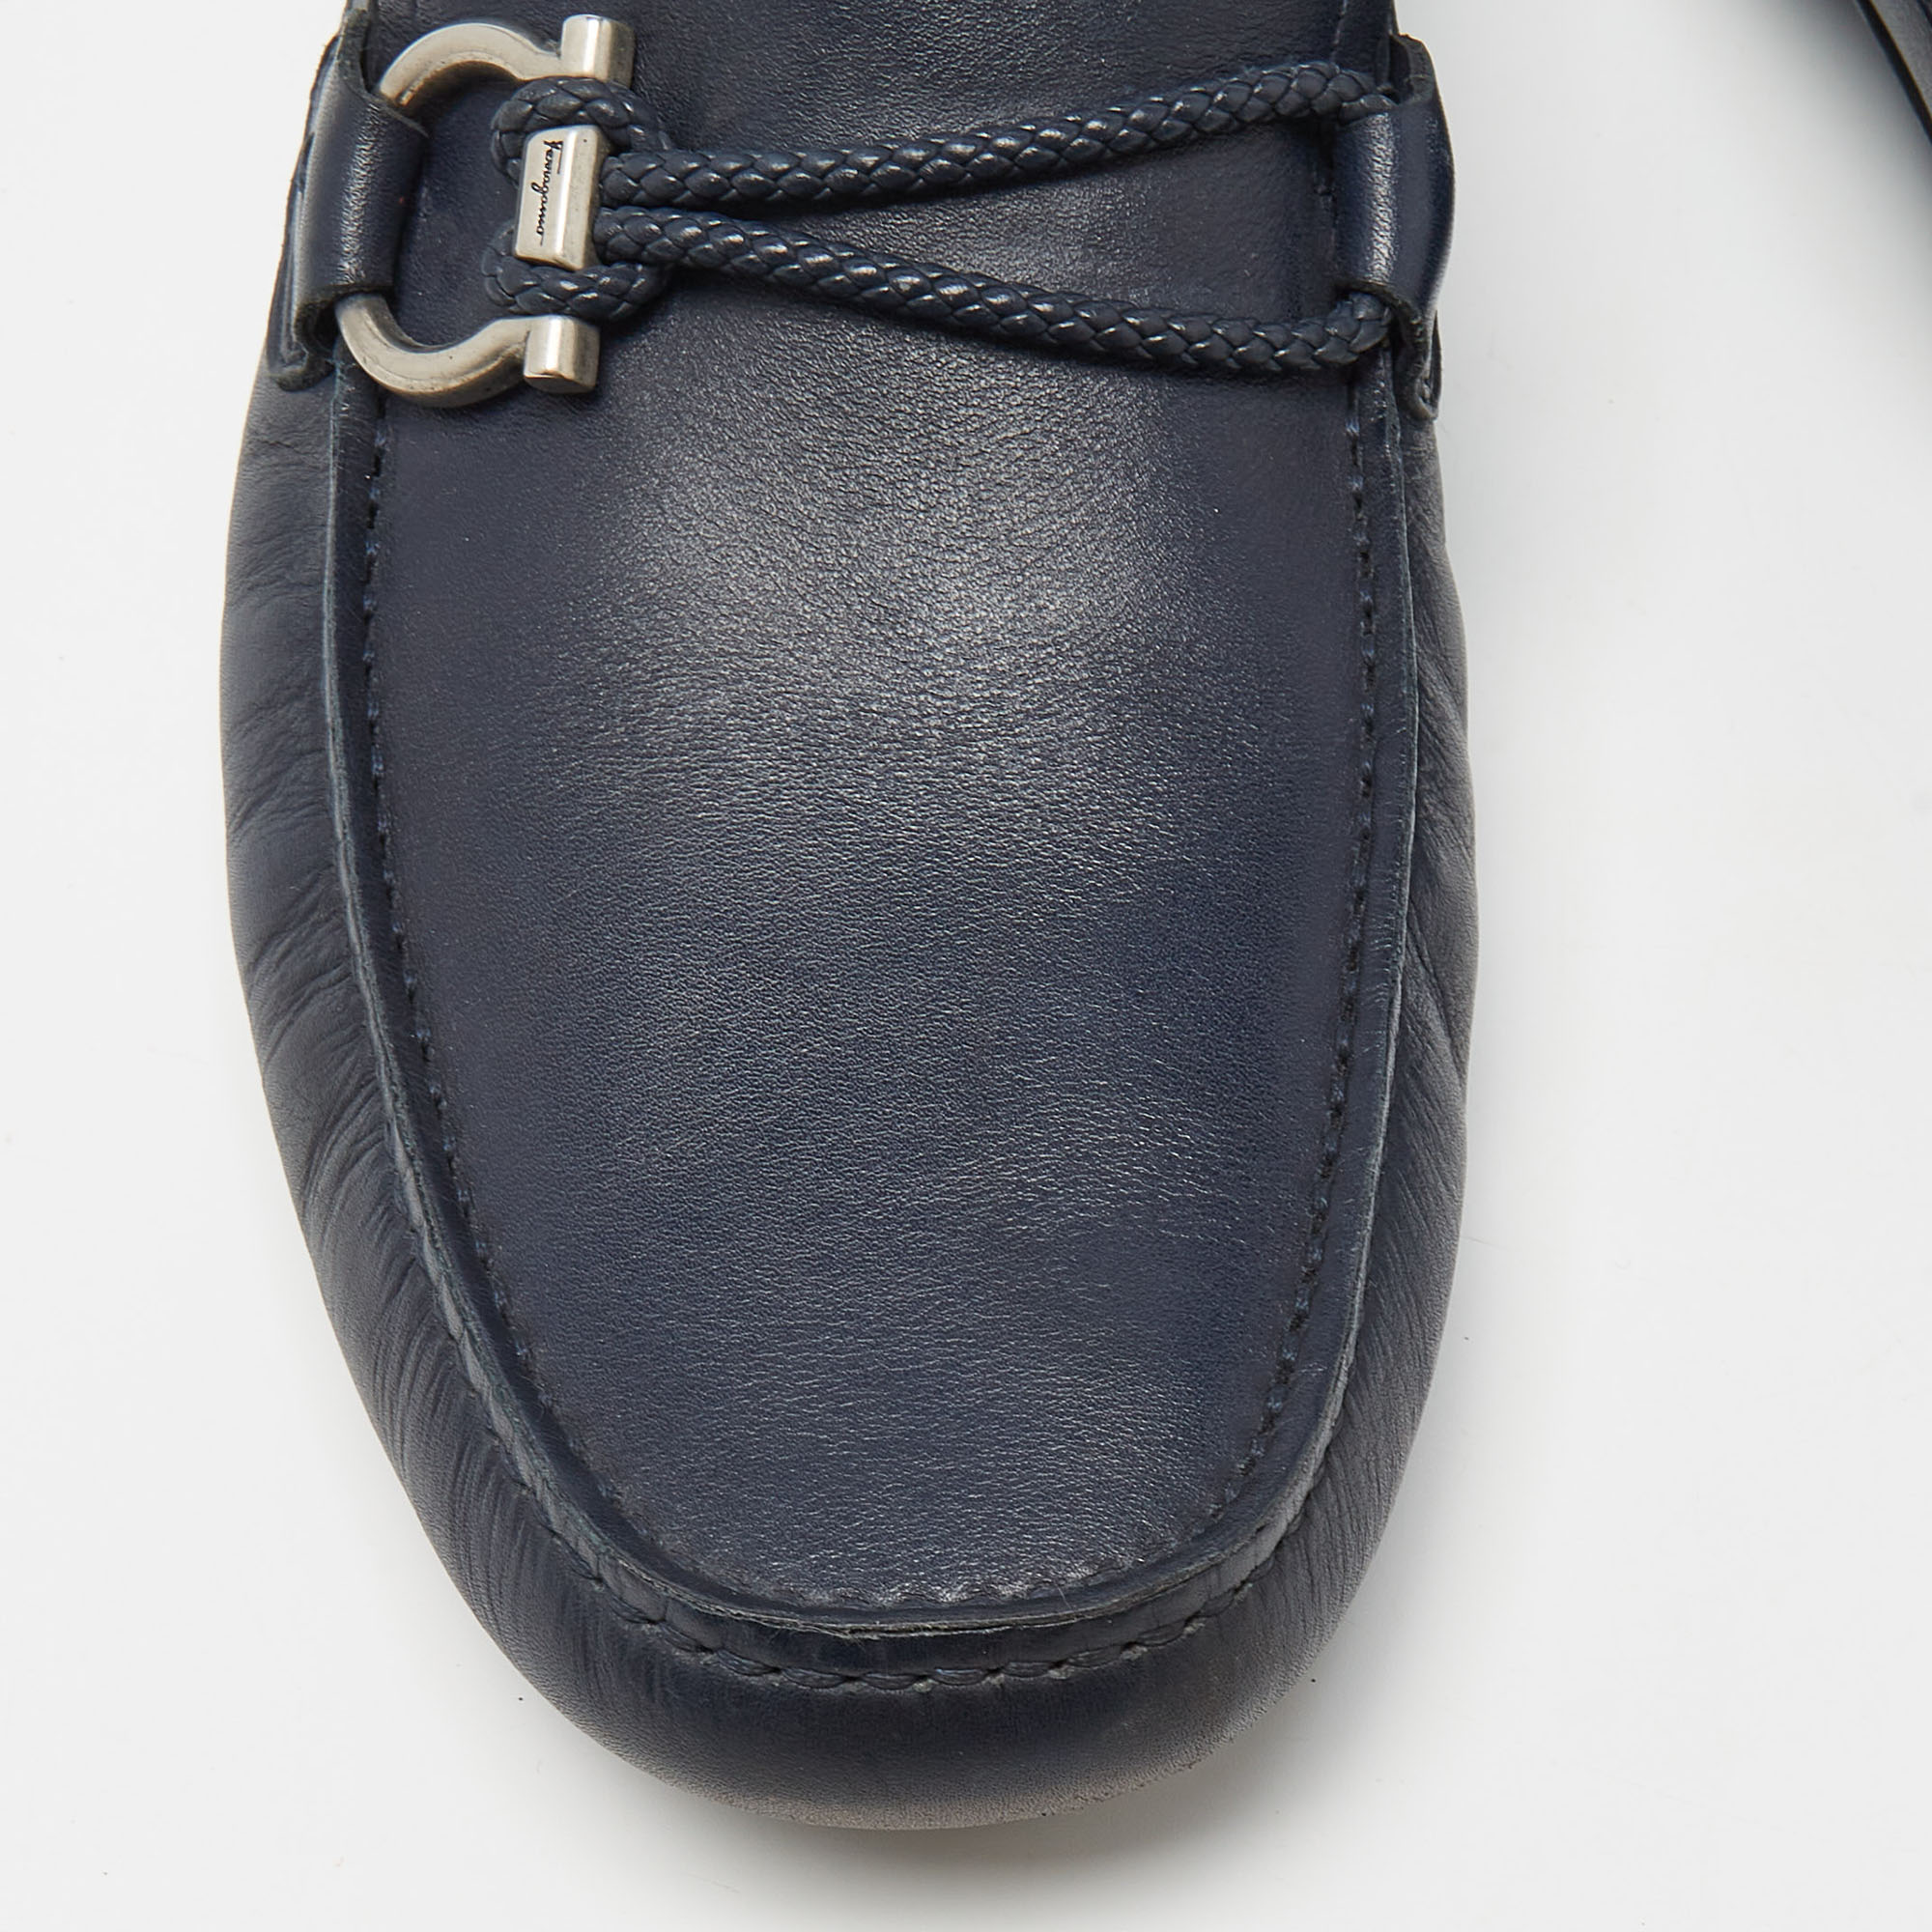 Salvatore Ferragamo Navy Blue Leather Slip On Loafers Size 42.5